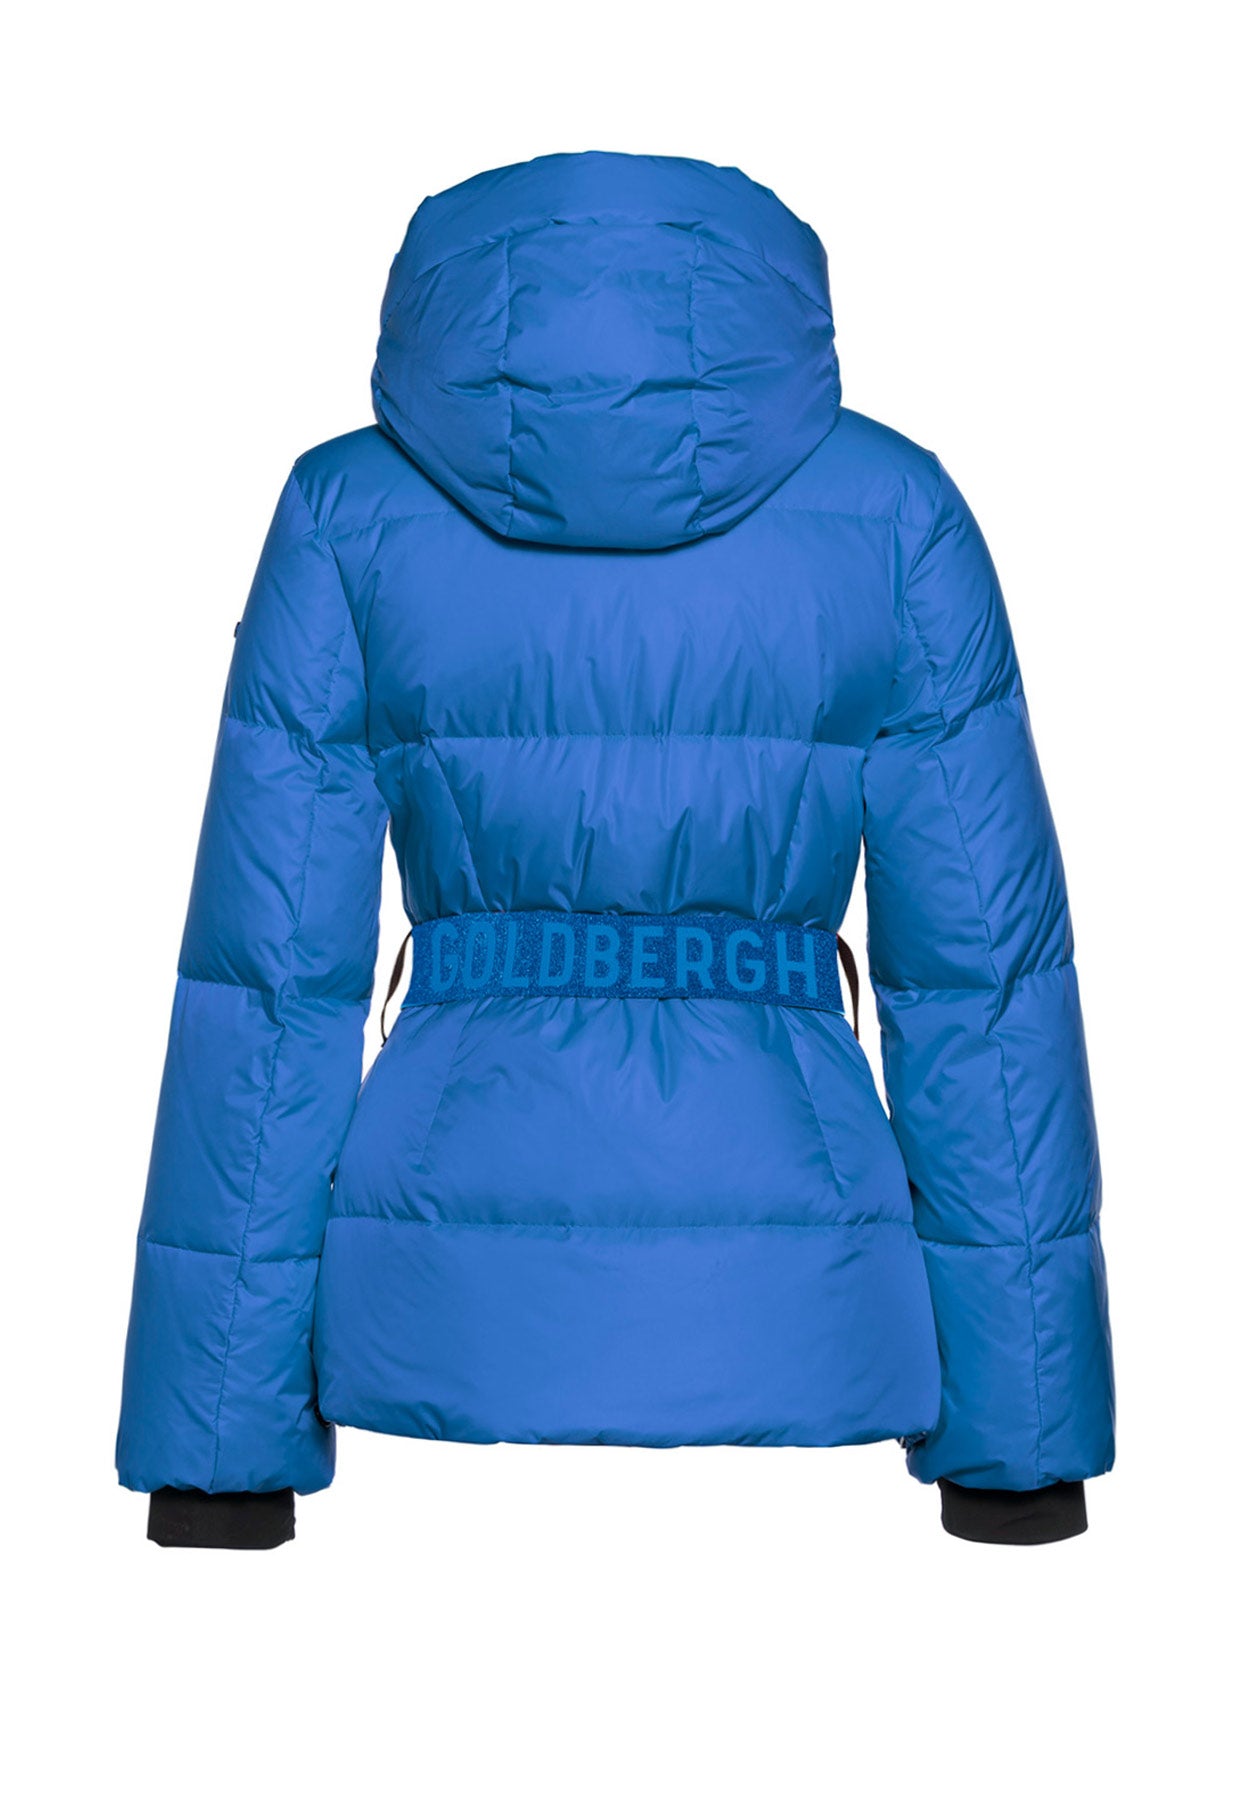 Goldbergh Snowmass Downfilled Ski Jacket in Blue